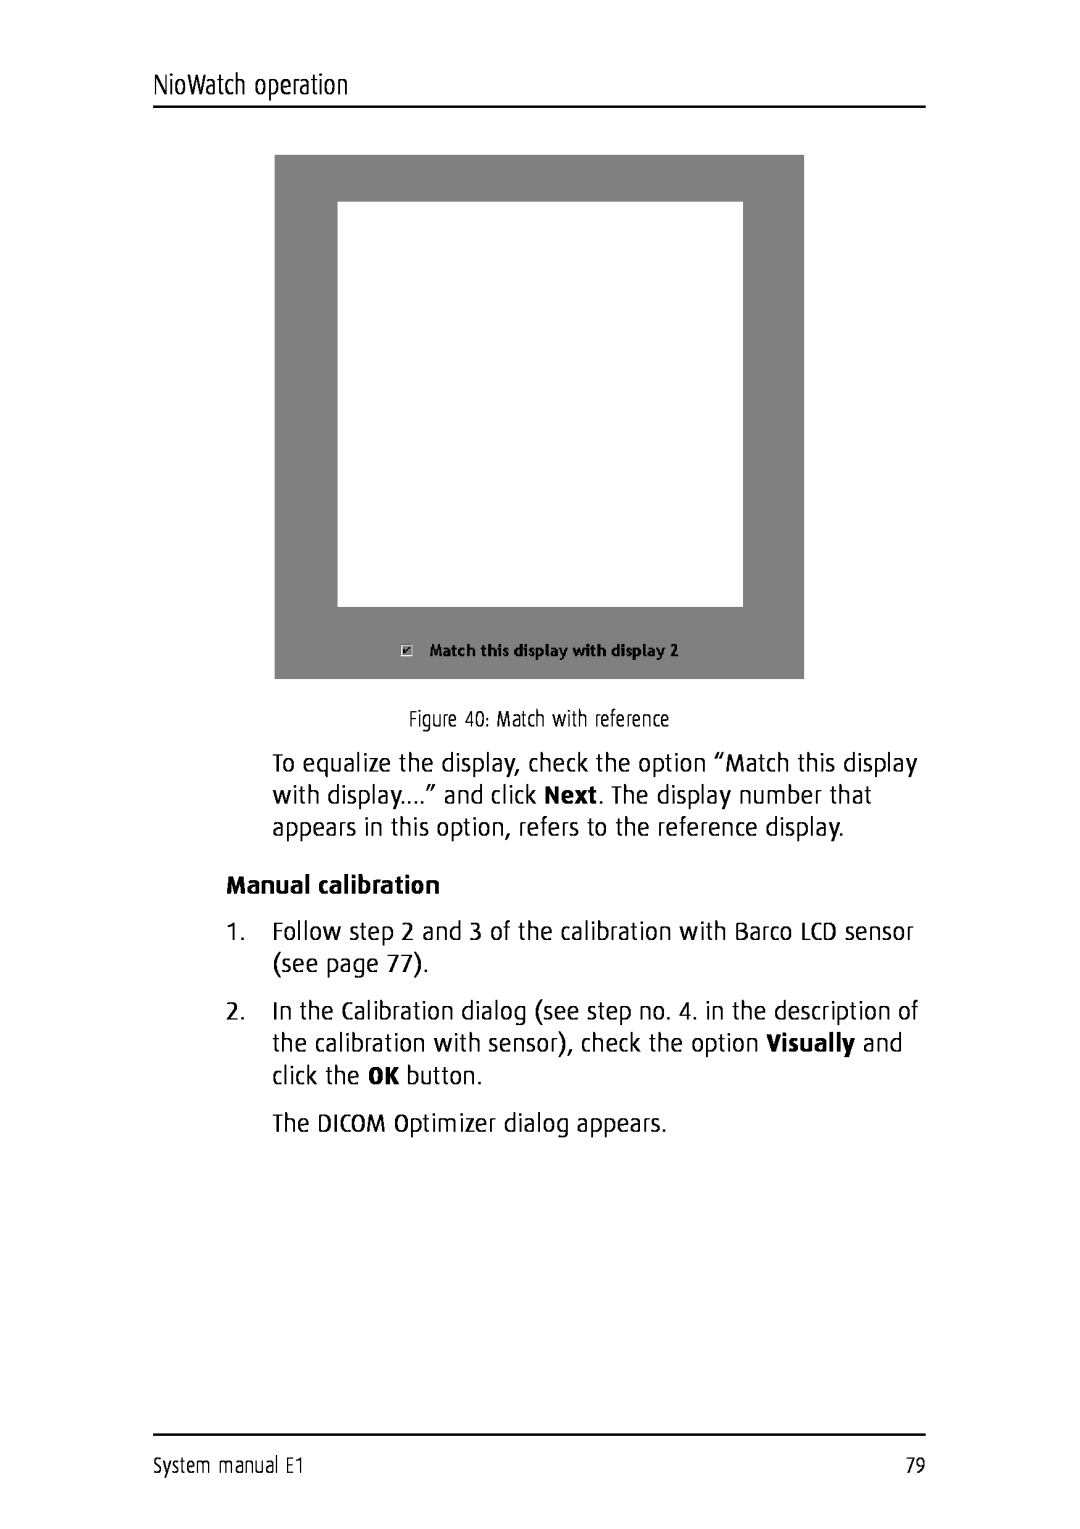 Barco E1 manual Manual calibration, NioWatch operation 